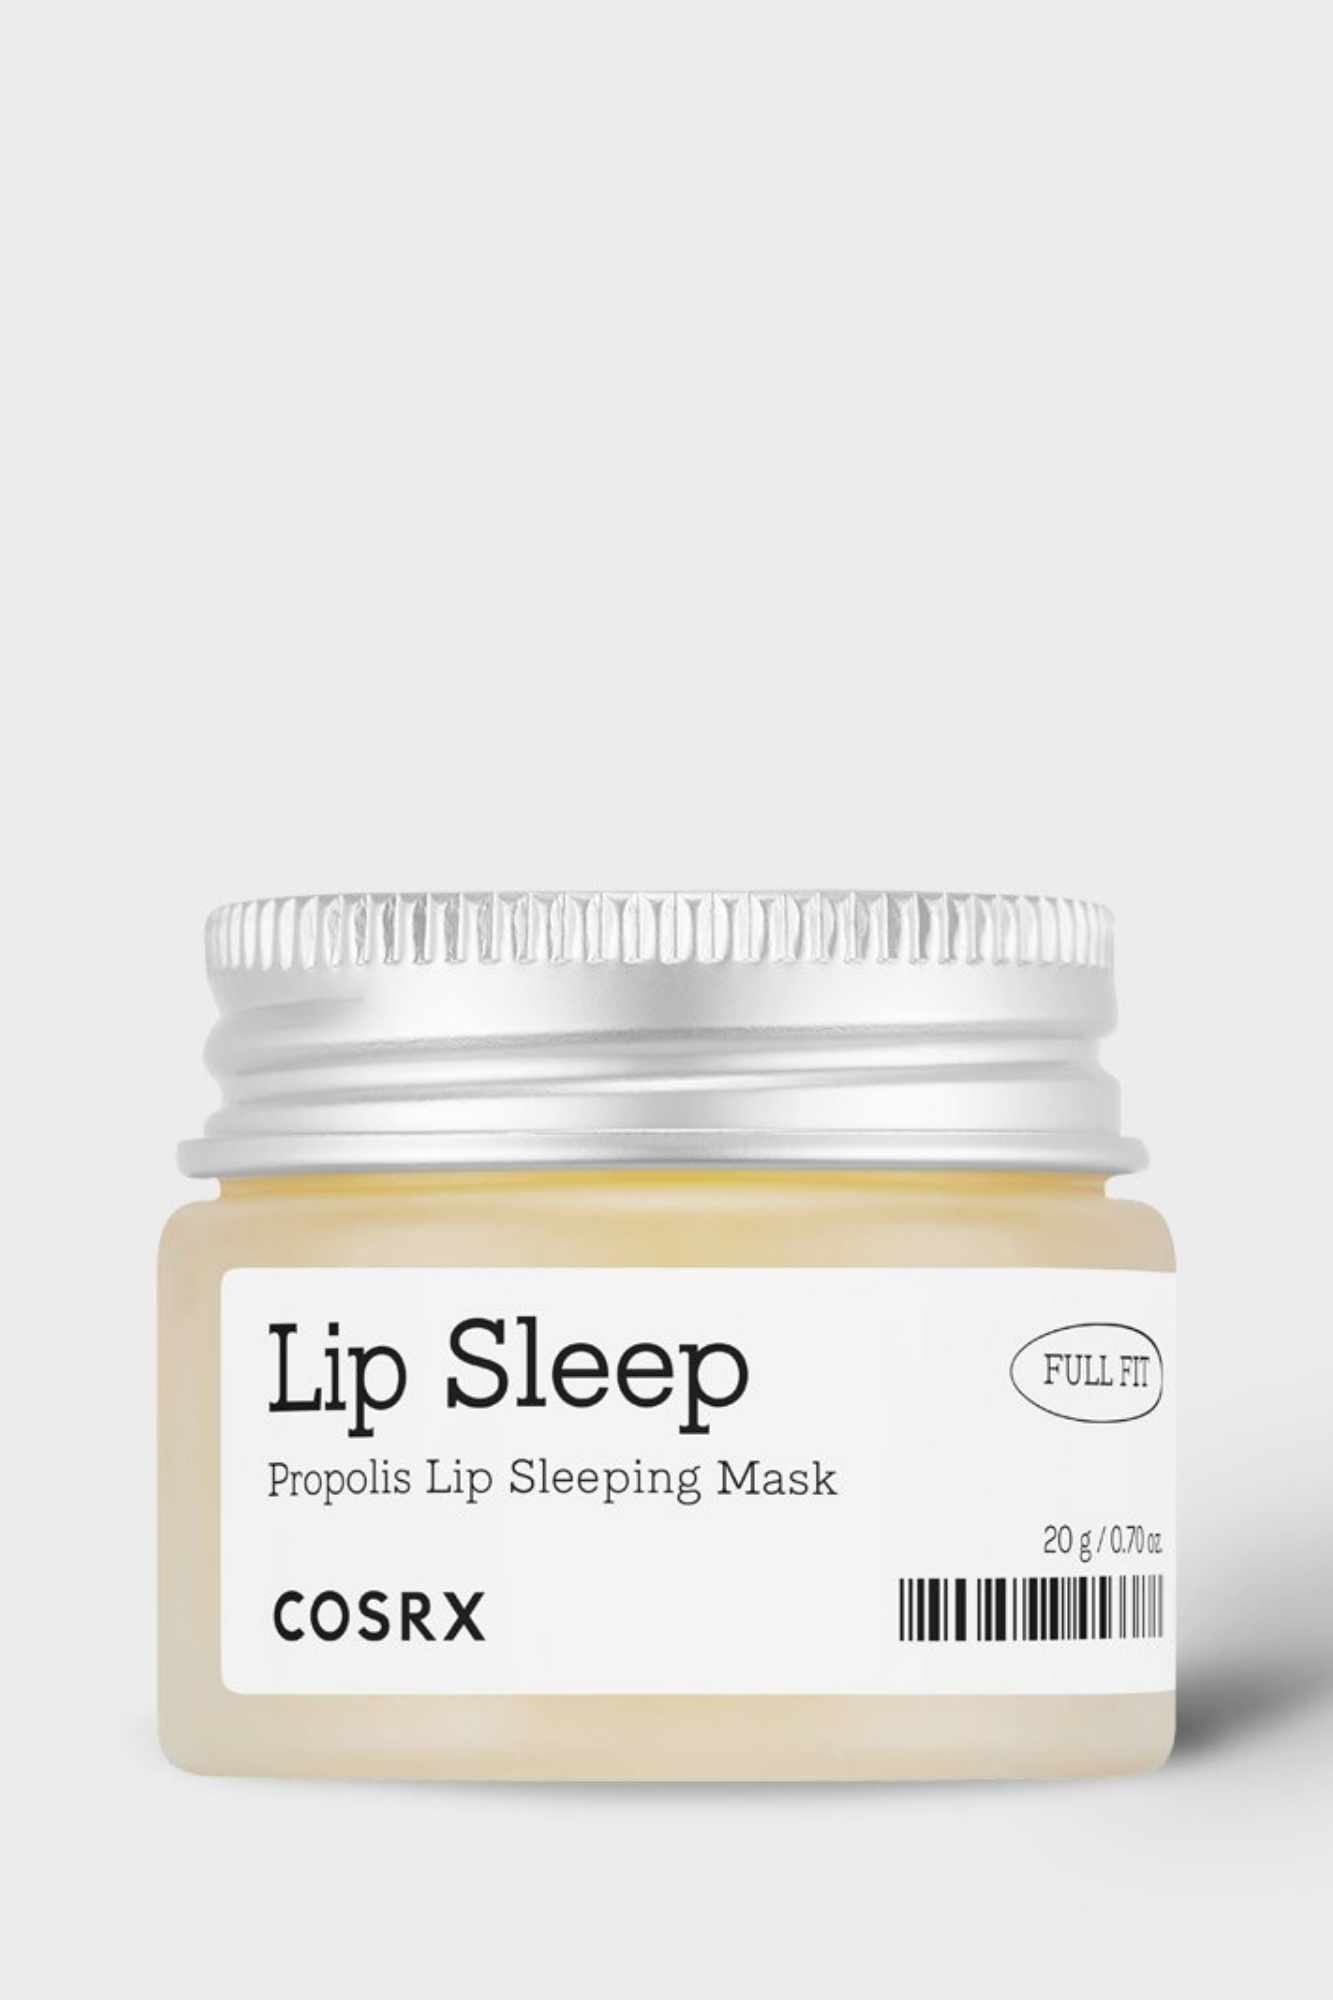 COSRX - Full Fit Propolis Lip Sleeping Mask - 20g